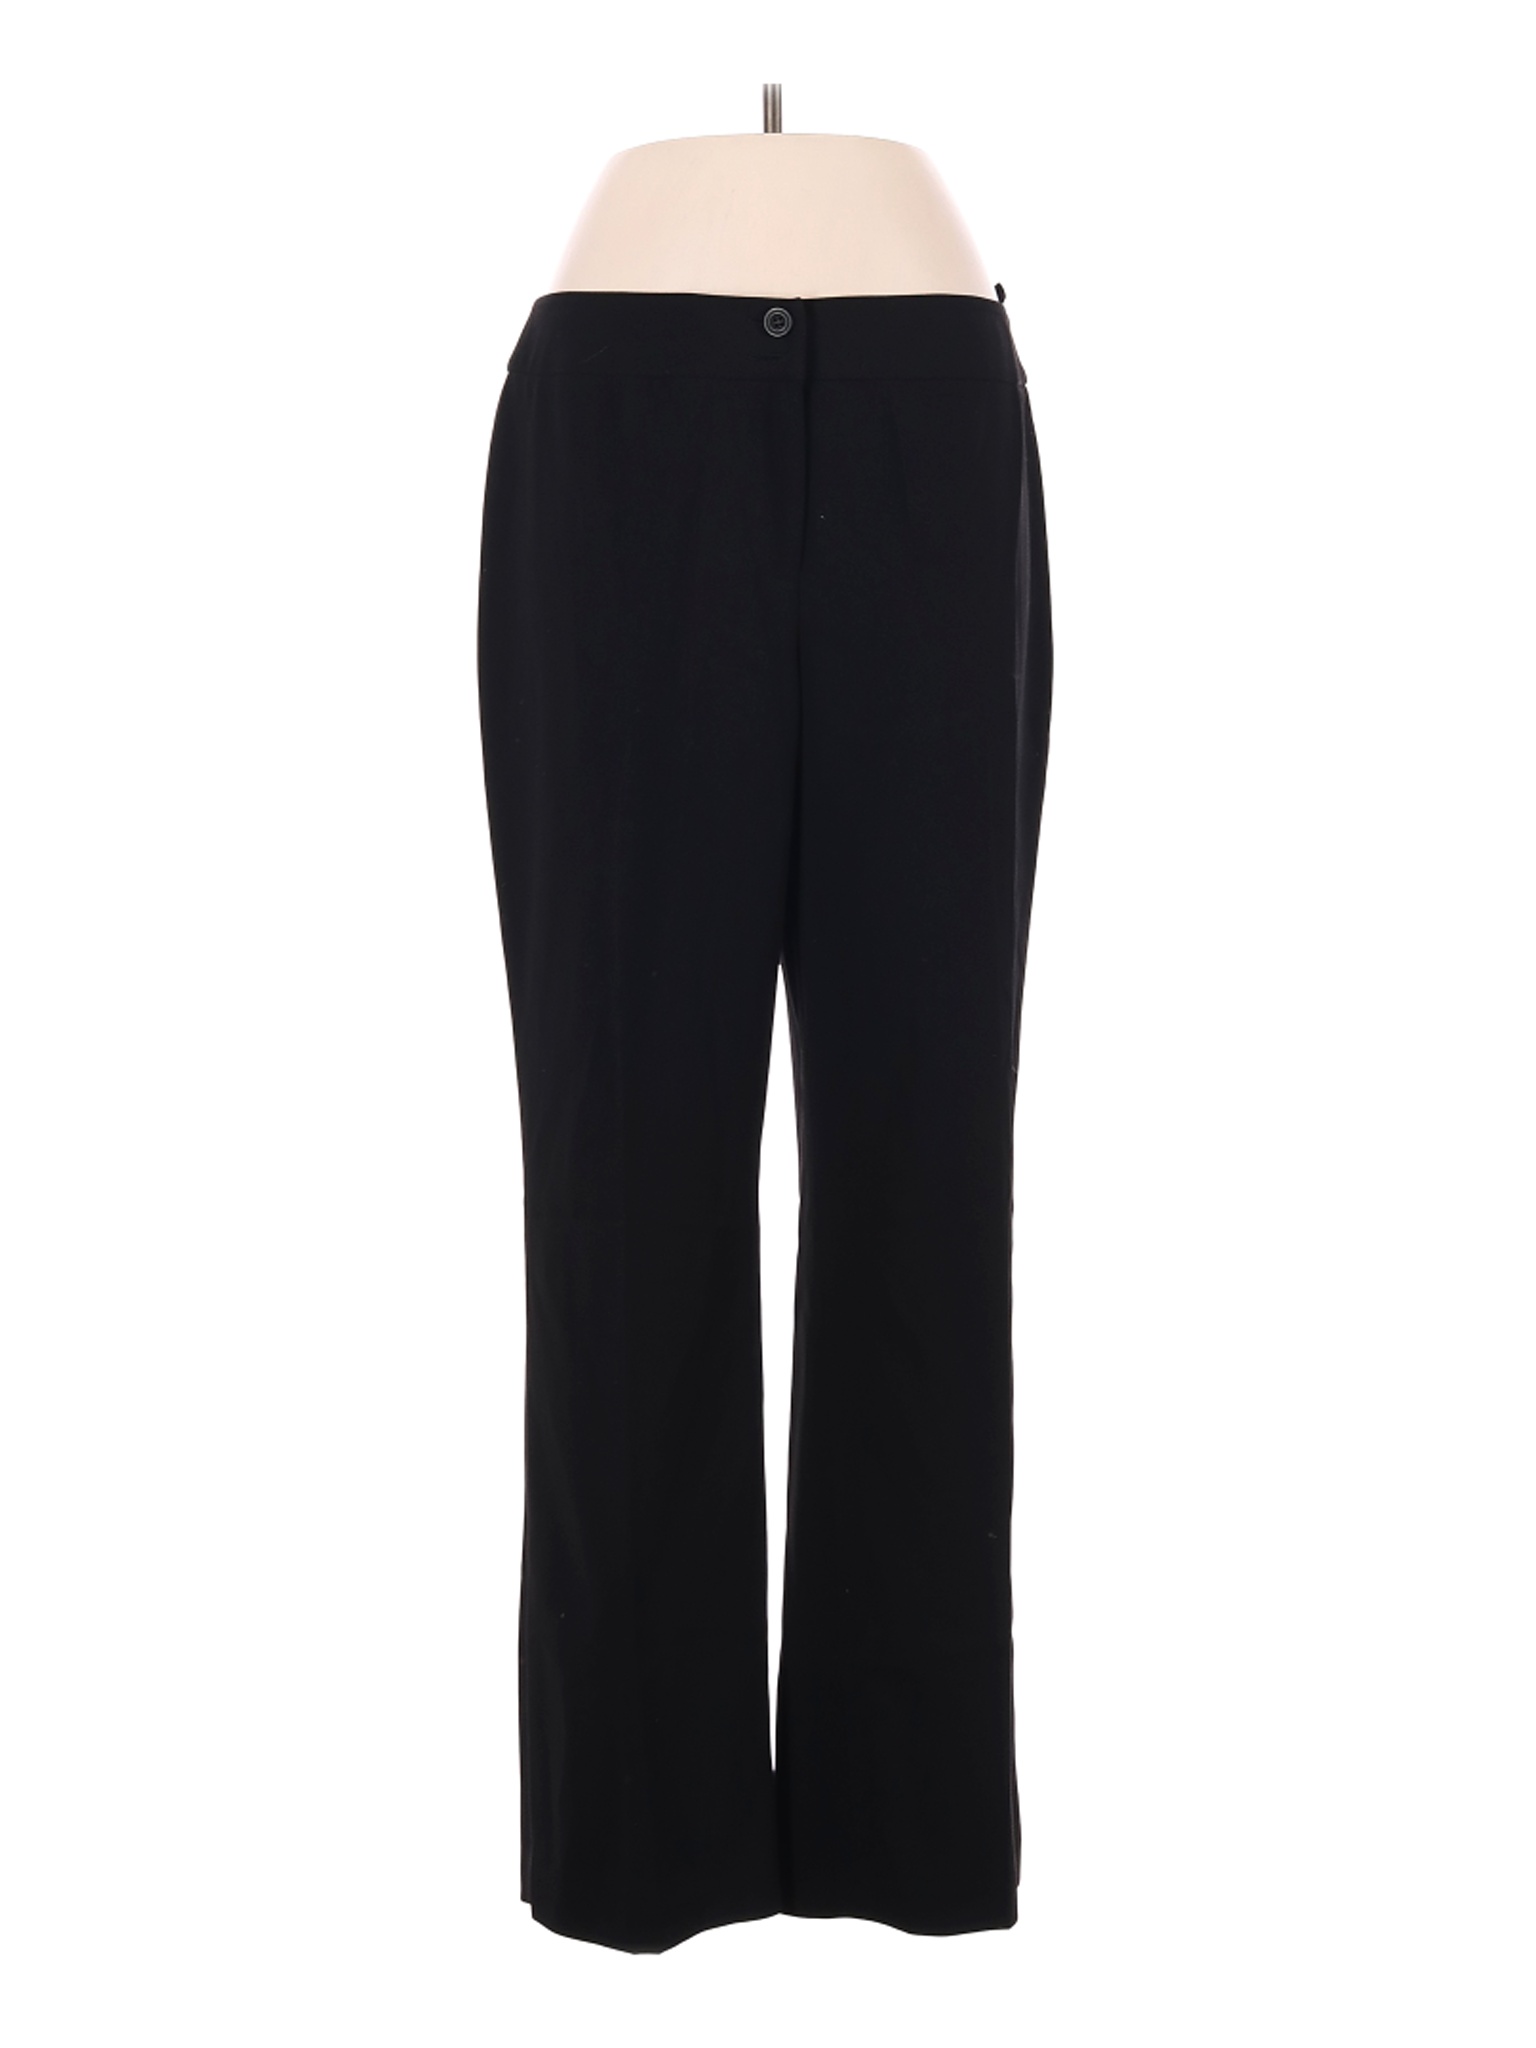 Style&Co Women Black Dress Pants 12 | eBay